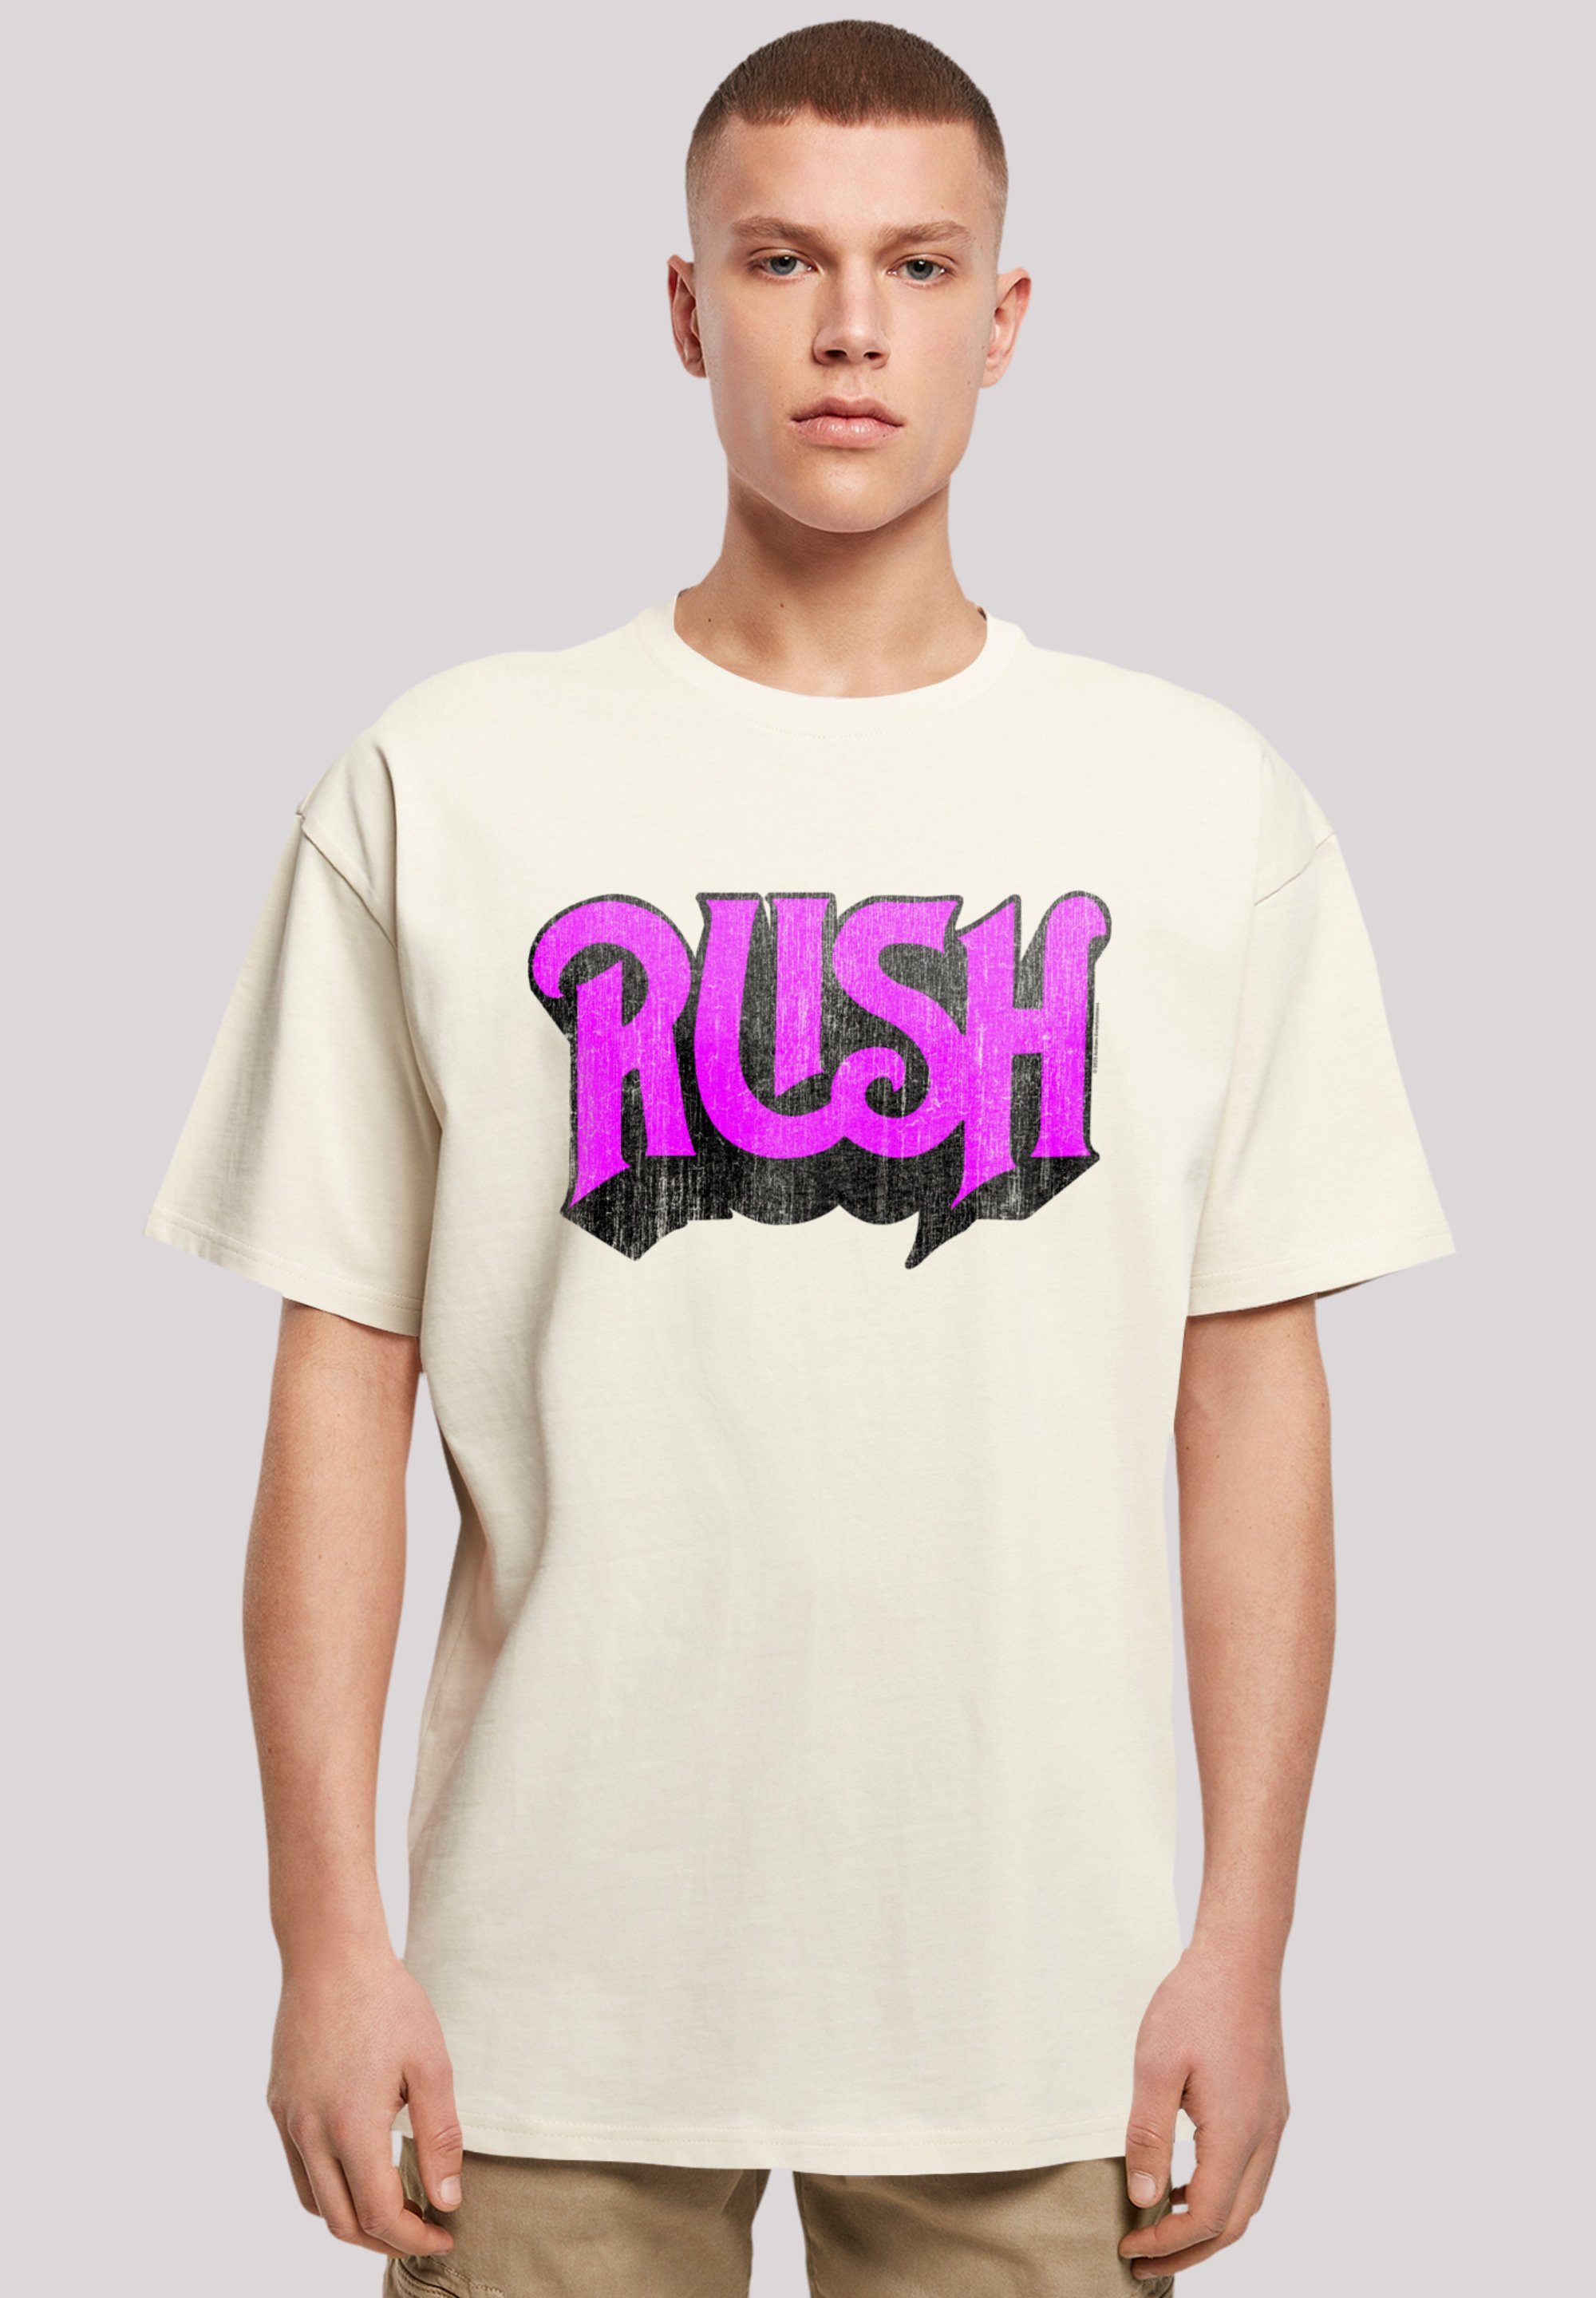 F4NT4STIC T-Shirt Rush Rock Band Distressed Logo Premium Qualität sand | T-Shirts